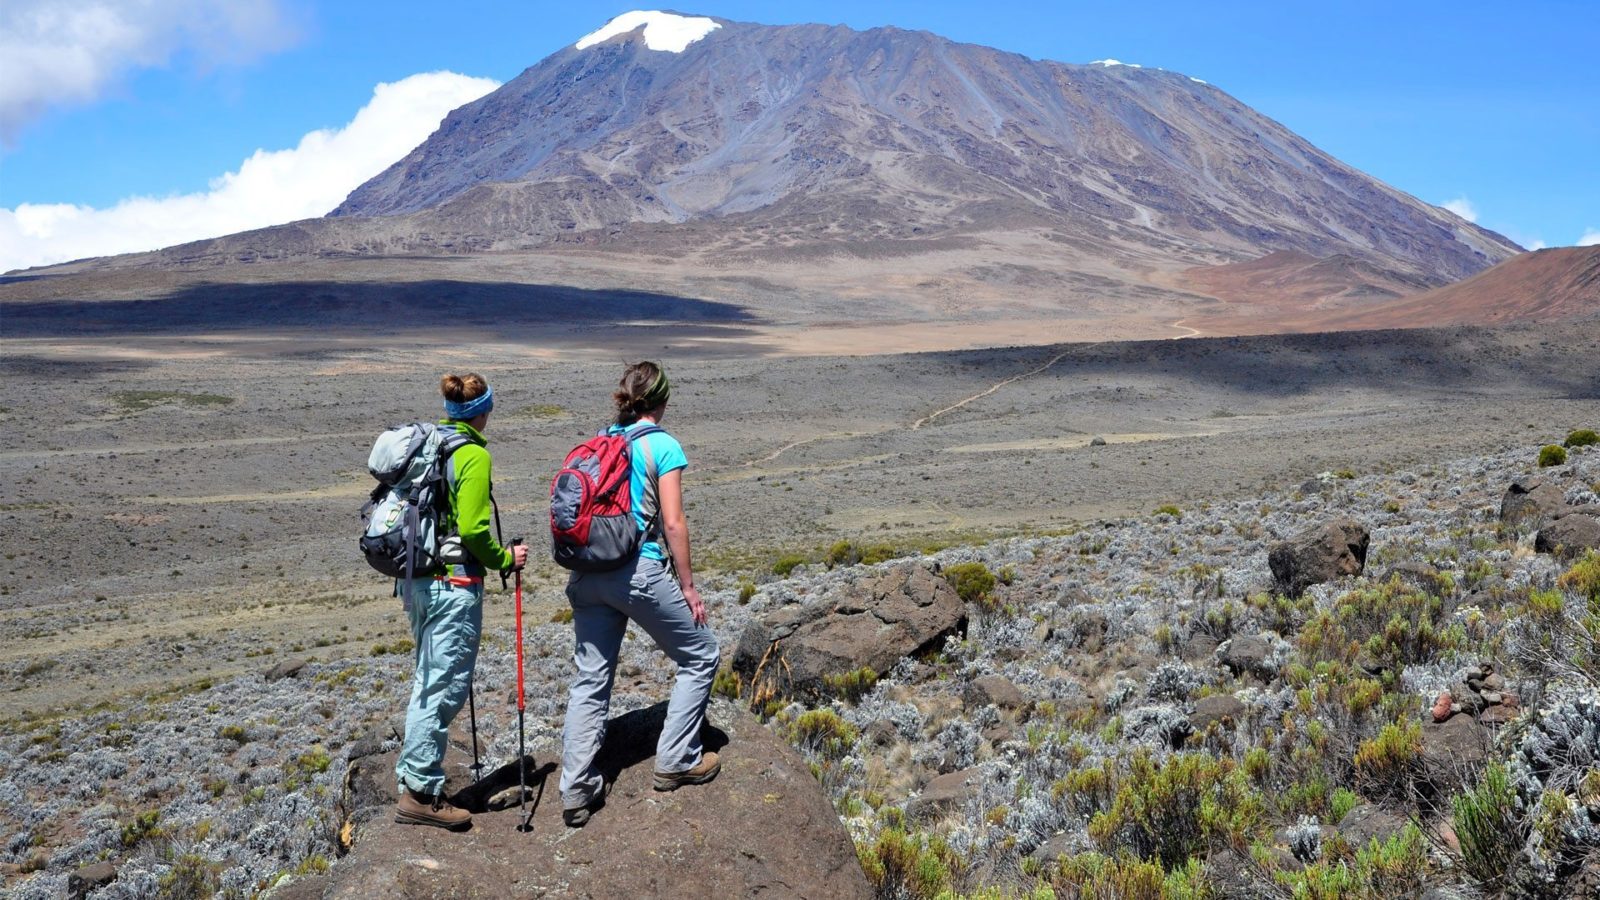 Mount Kilimanjaro Climbing A Simple Climb For An Amateur?